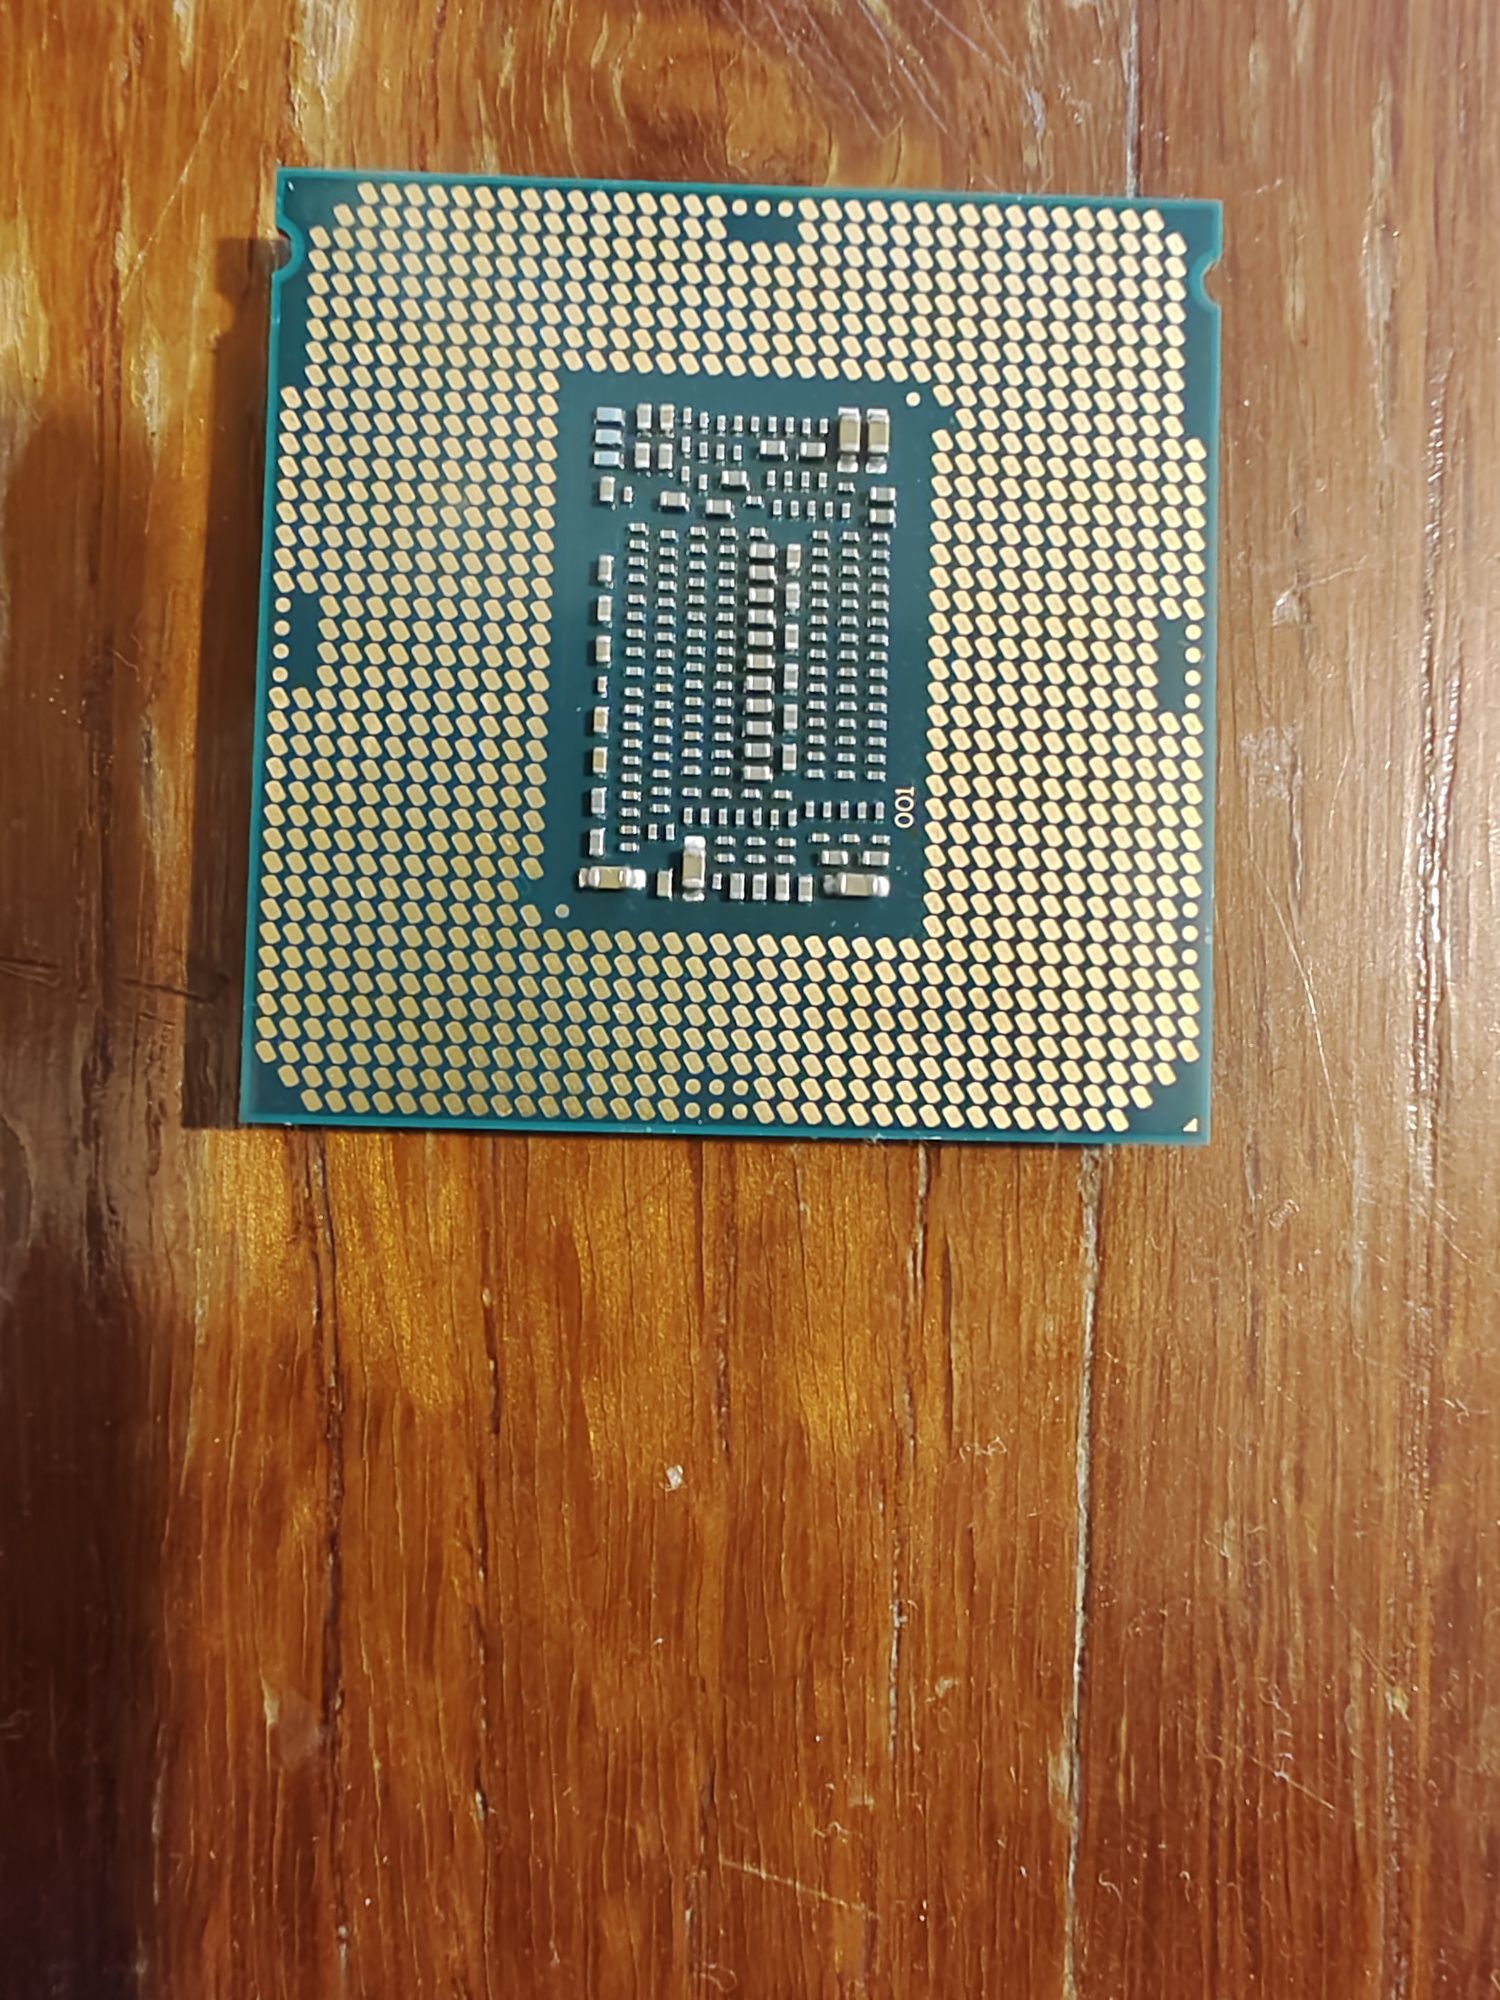 procesor intel i3 9100f